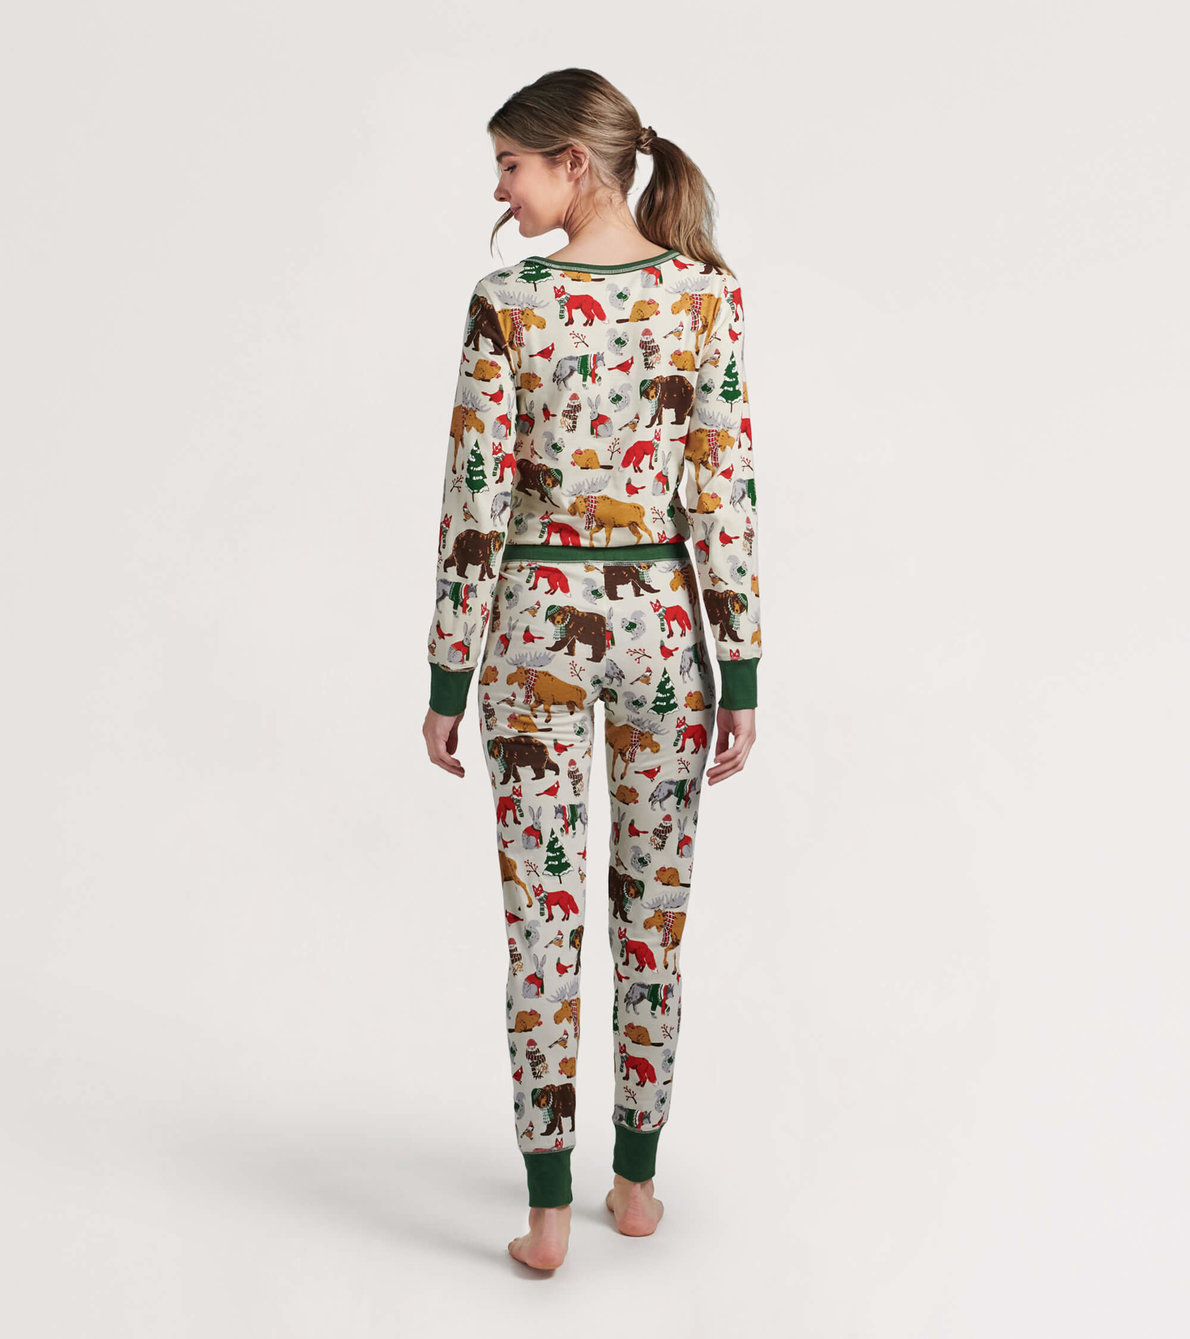 View larger image of Woodland Winter Women's Jersey Pajama Set